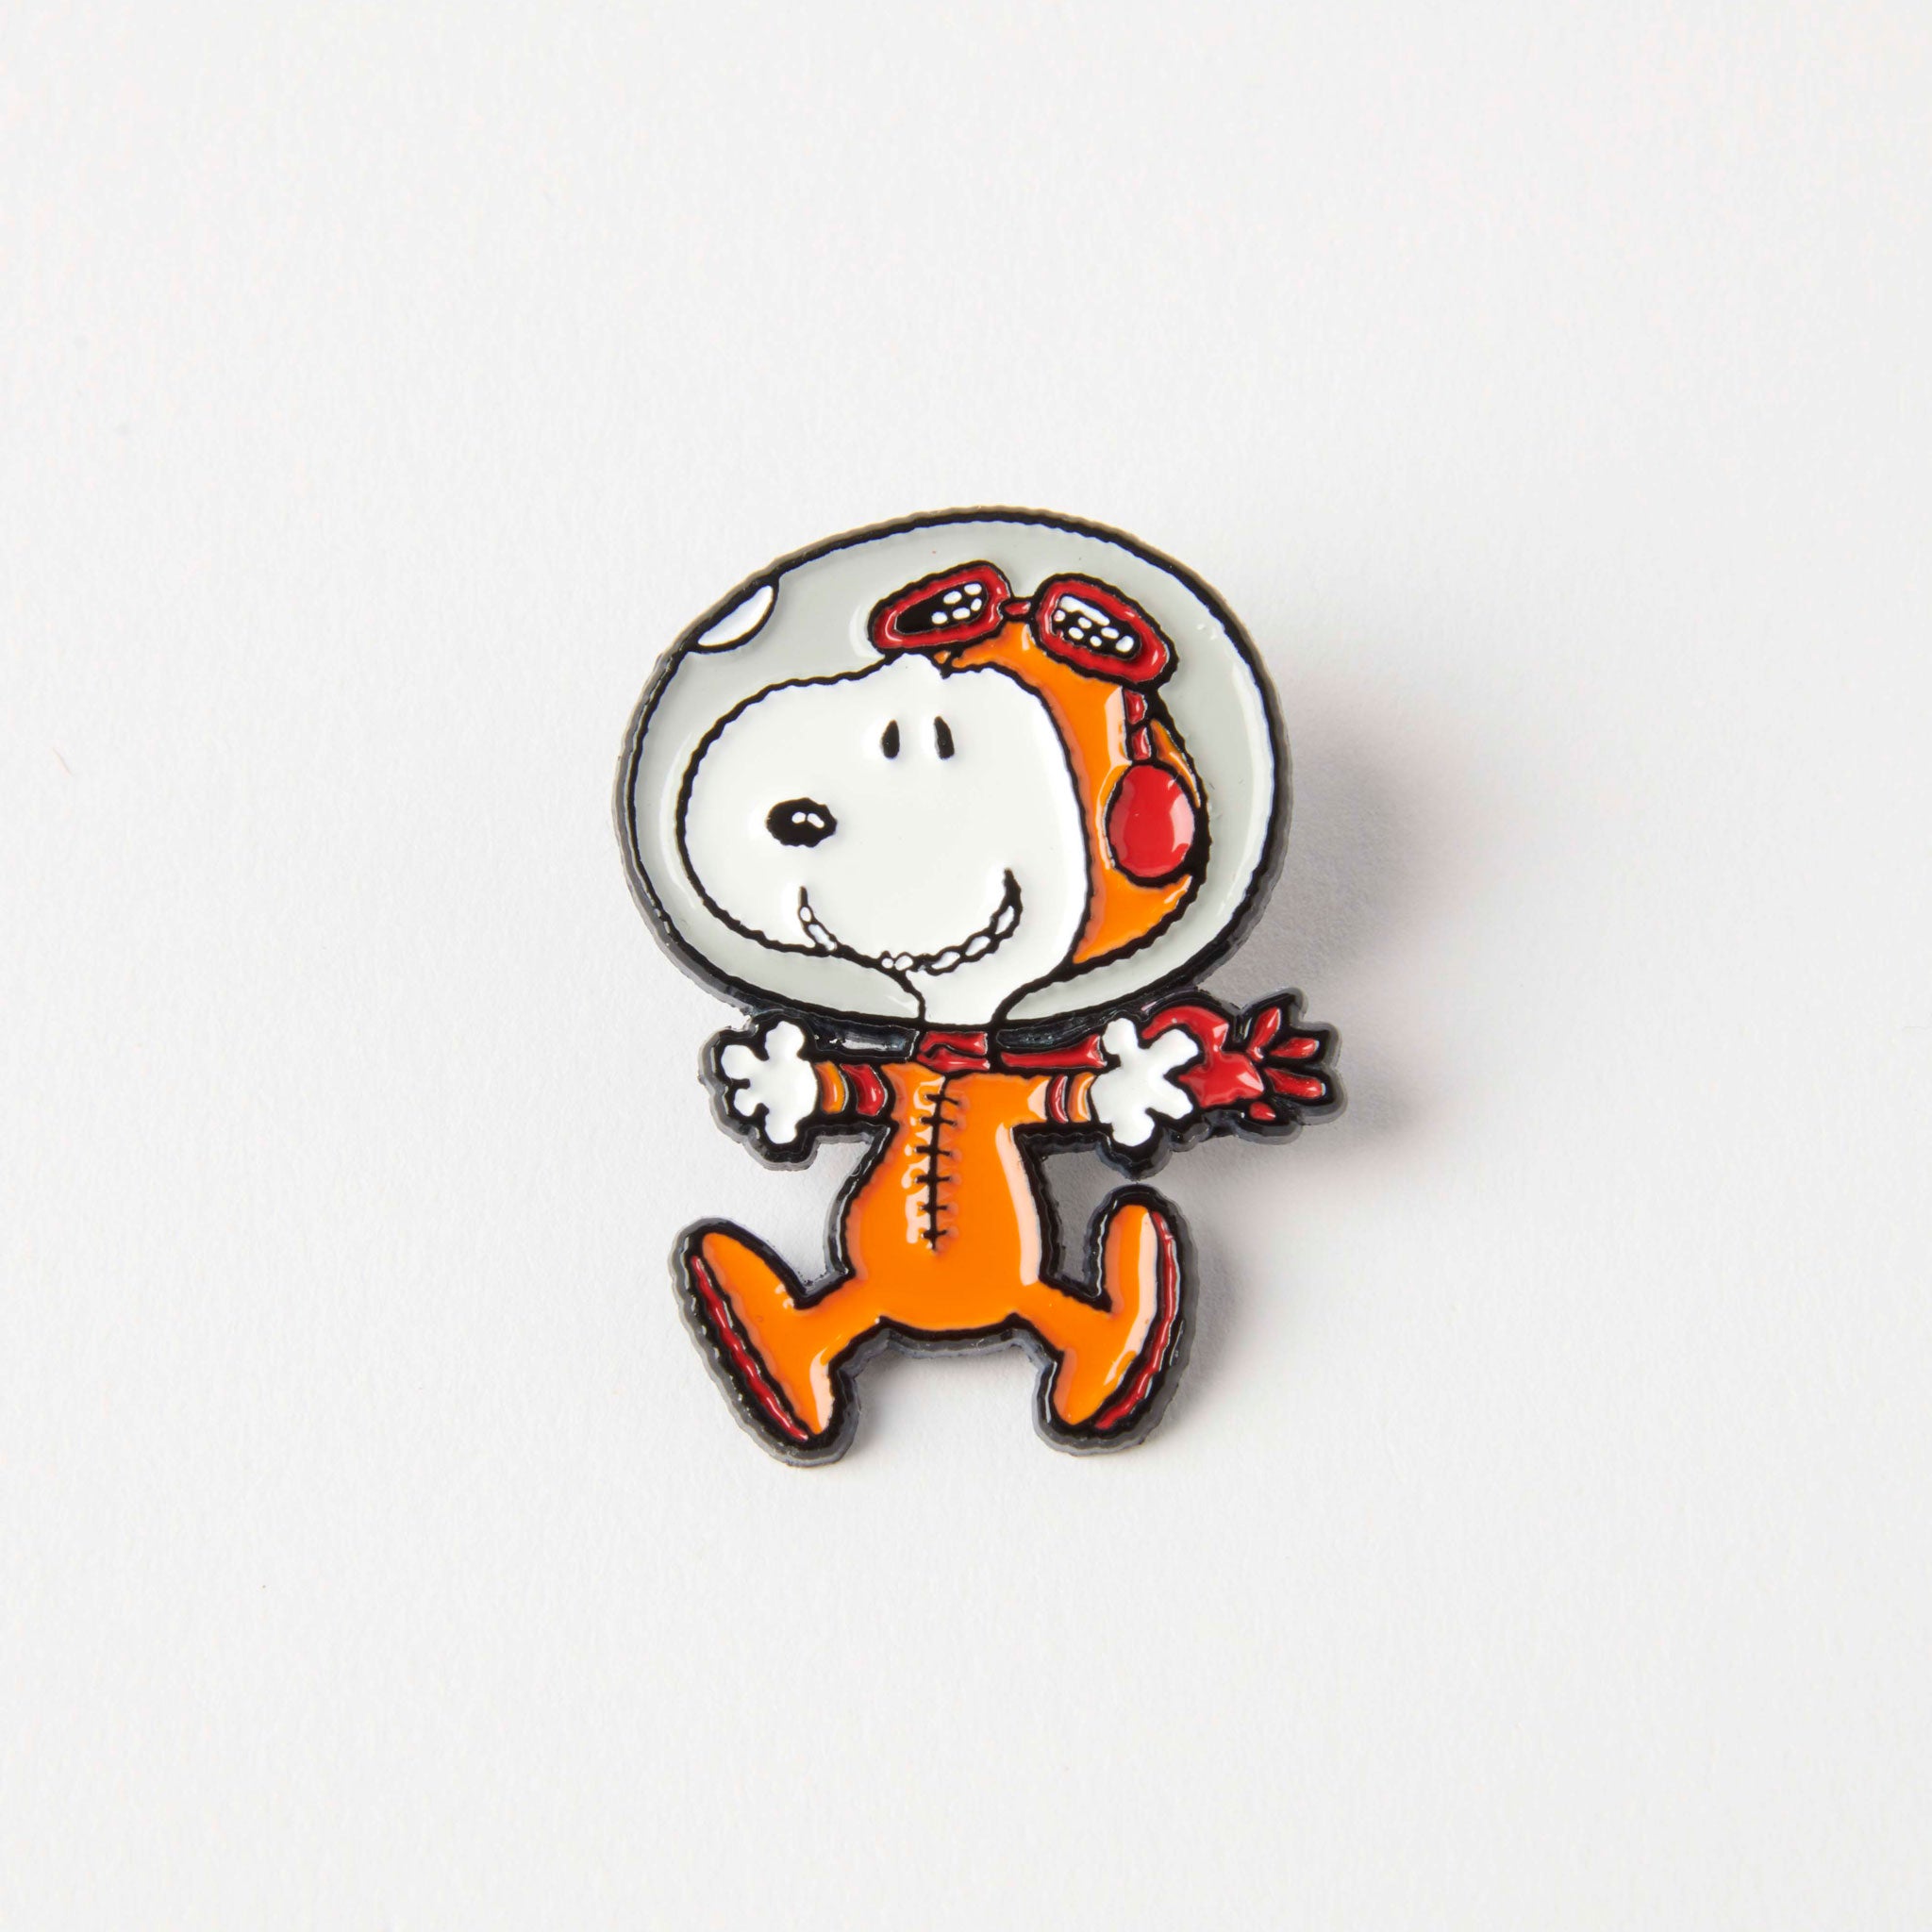 Peanuts Space Enamel Pin - Snoopy